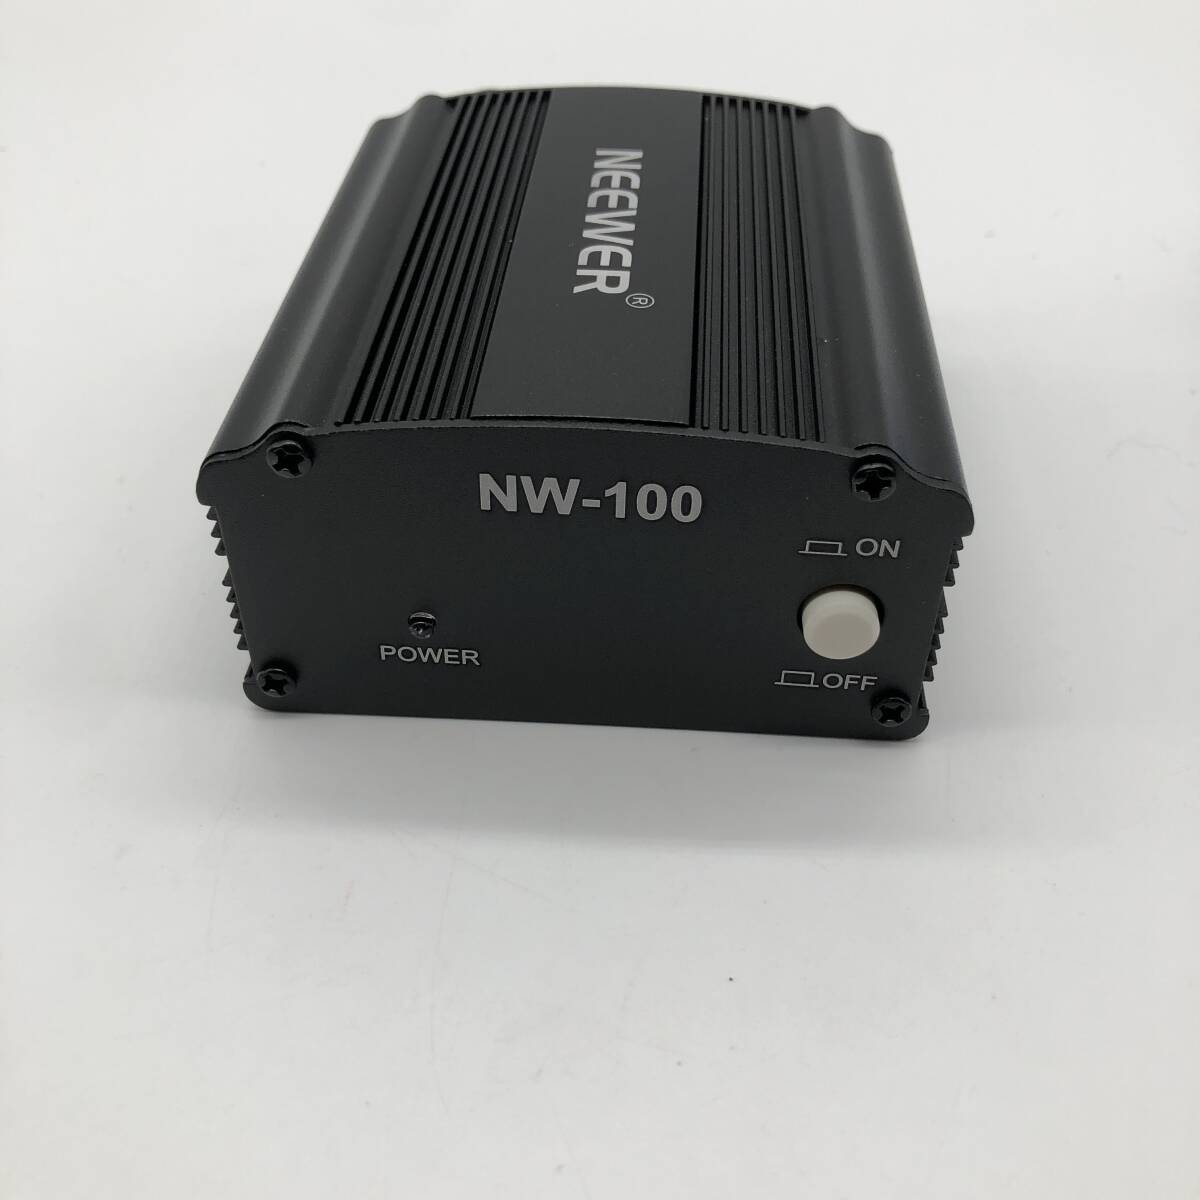 Neewer 1チャンネル48Vファンタム電源 A1701 5ft USBケーブル、BONUS+XLR 3ピンマイクケーブル付属 音楽レコーディング機器に対応の画像3